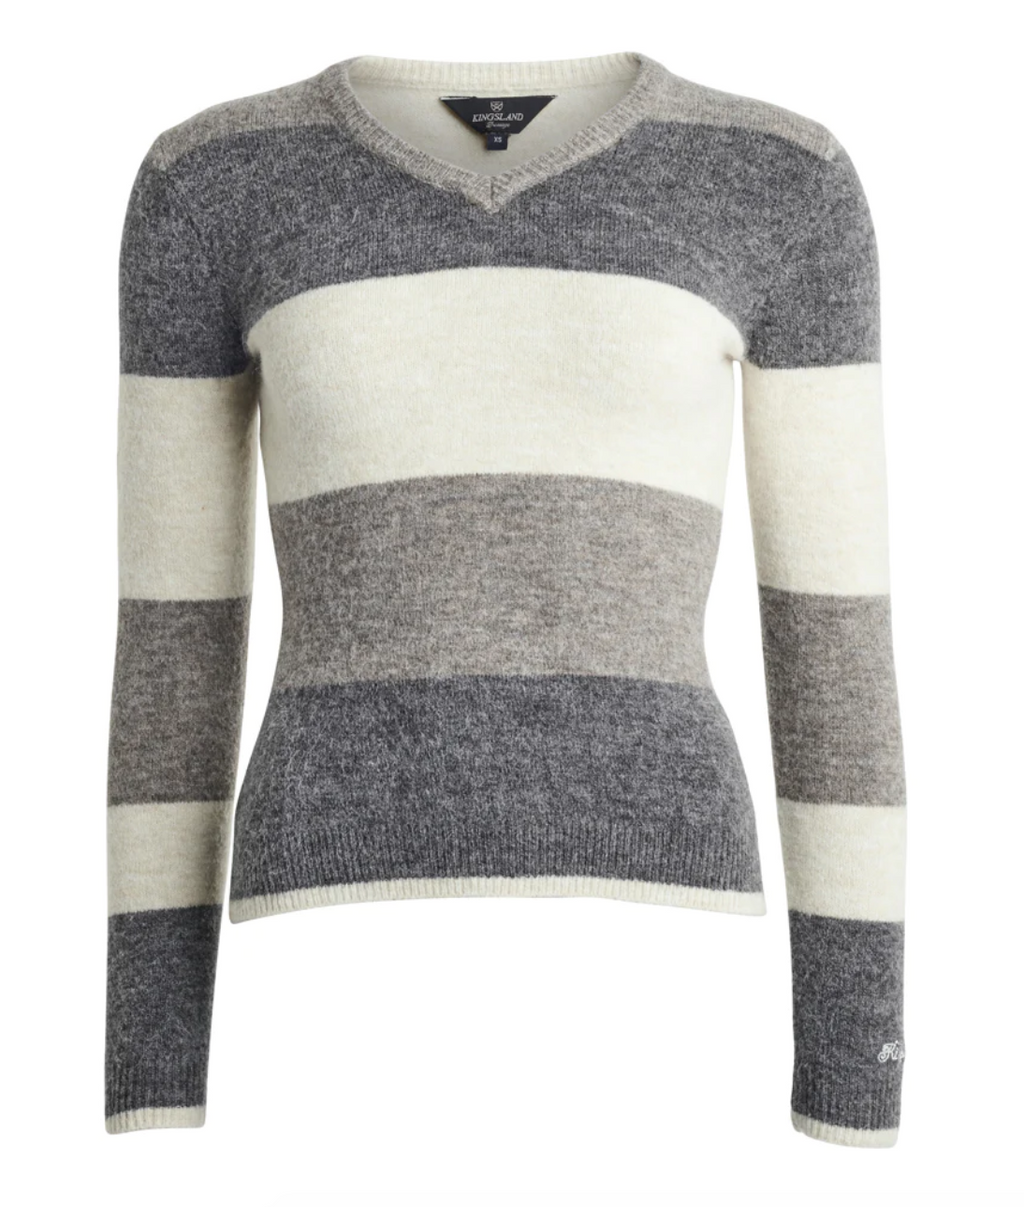 KLazurra Knitted Sweater